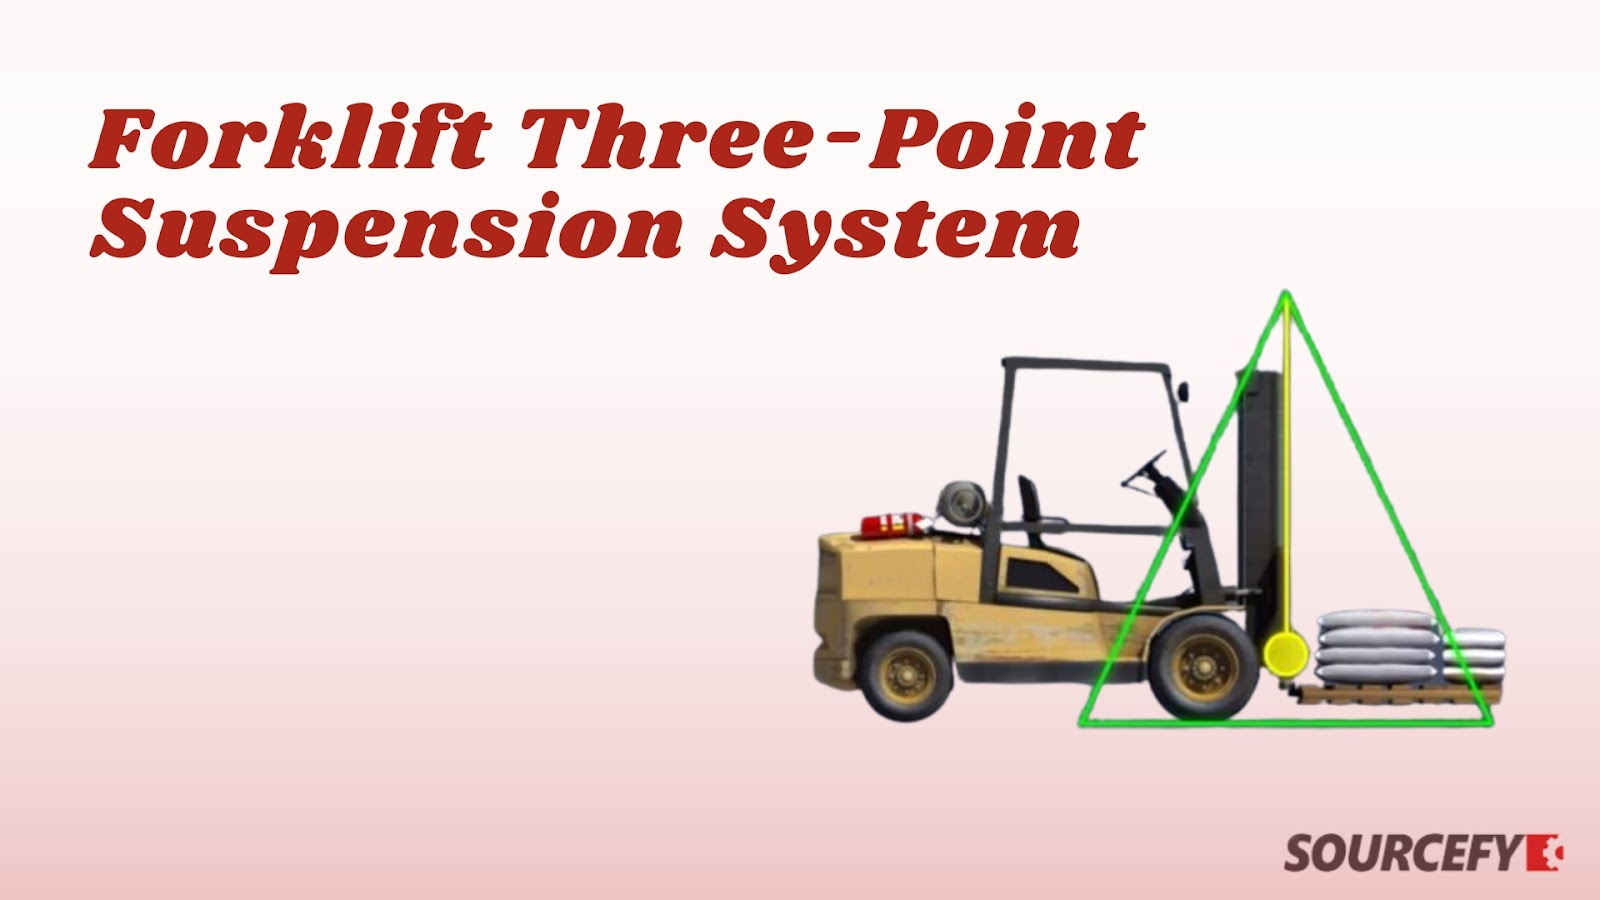 Forklift Three-Point Suspension System